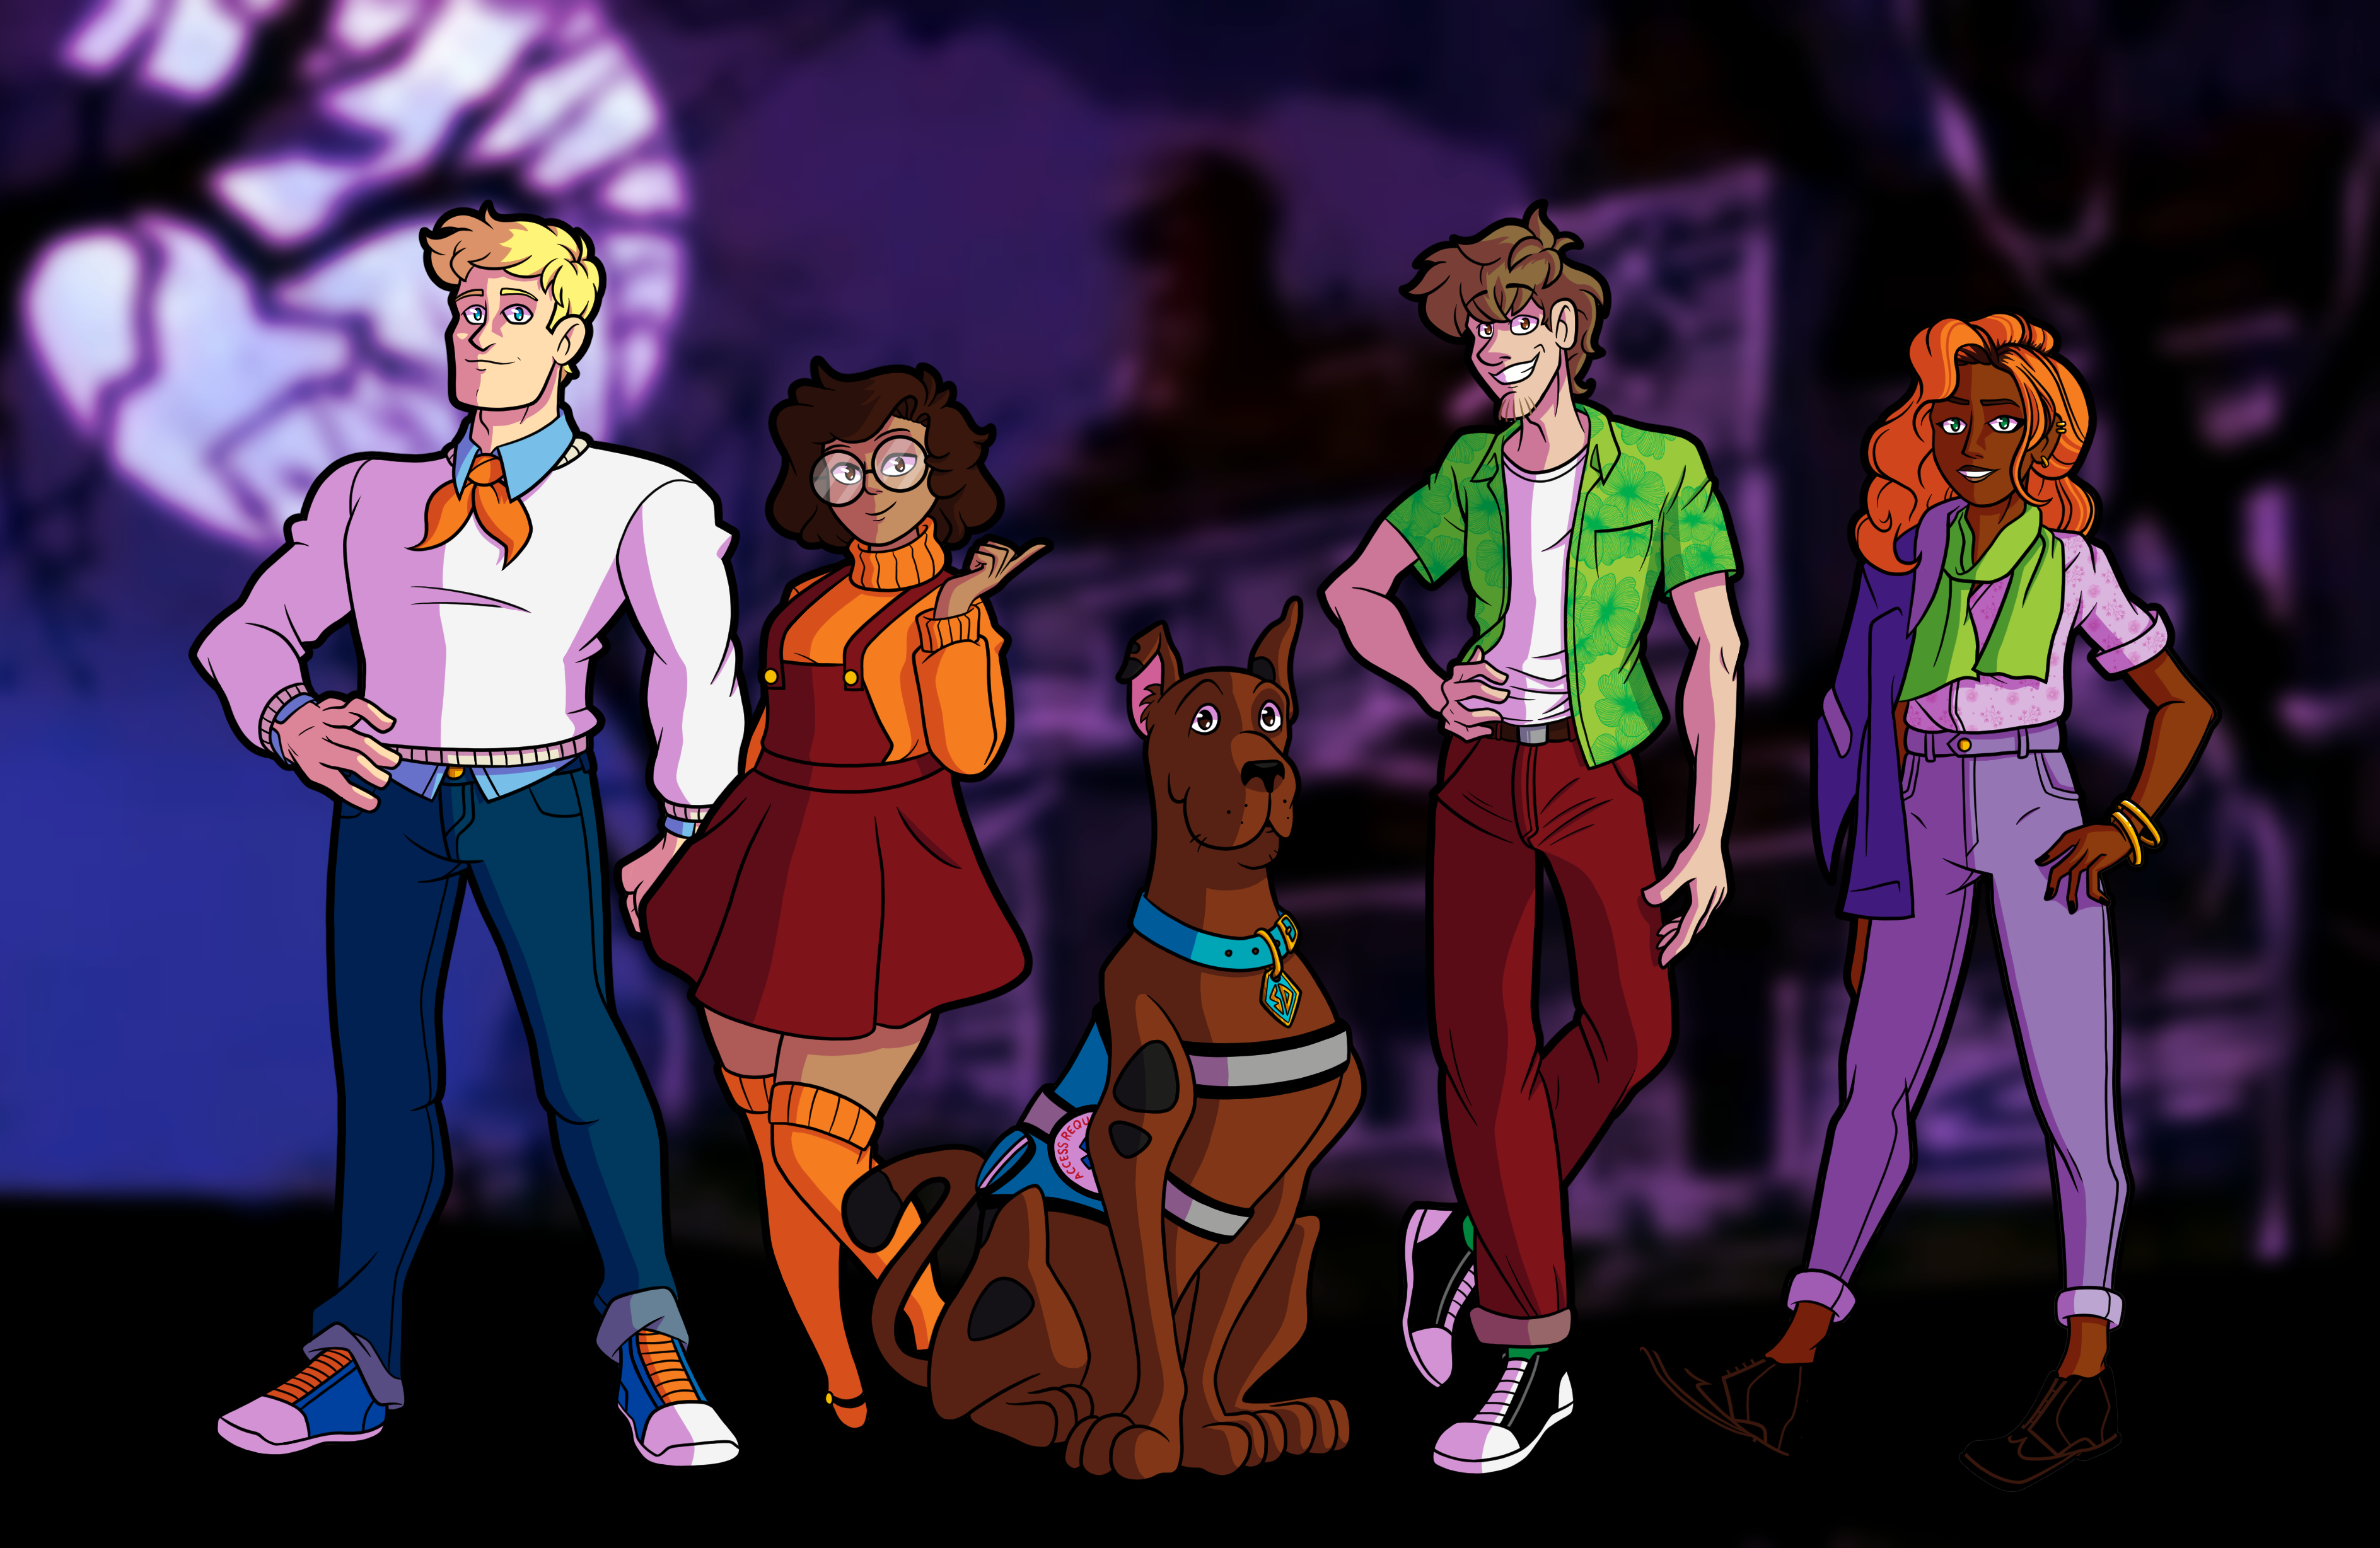 Scooby Doo Group Shot by BlatherskiteStudios on DeviantArt